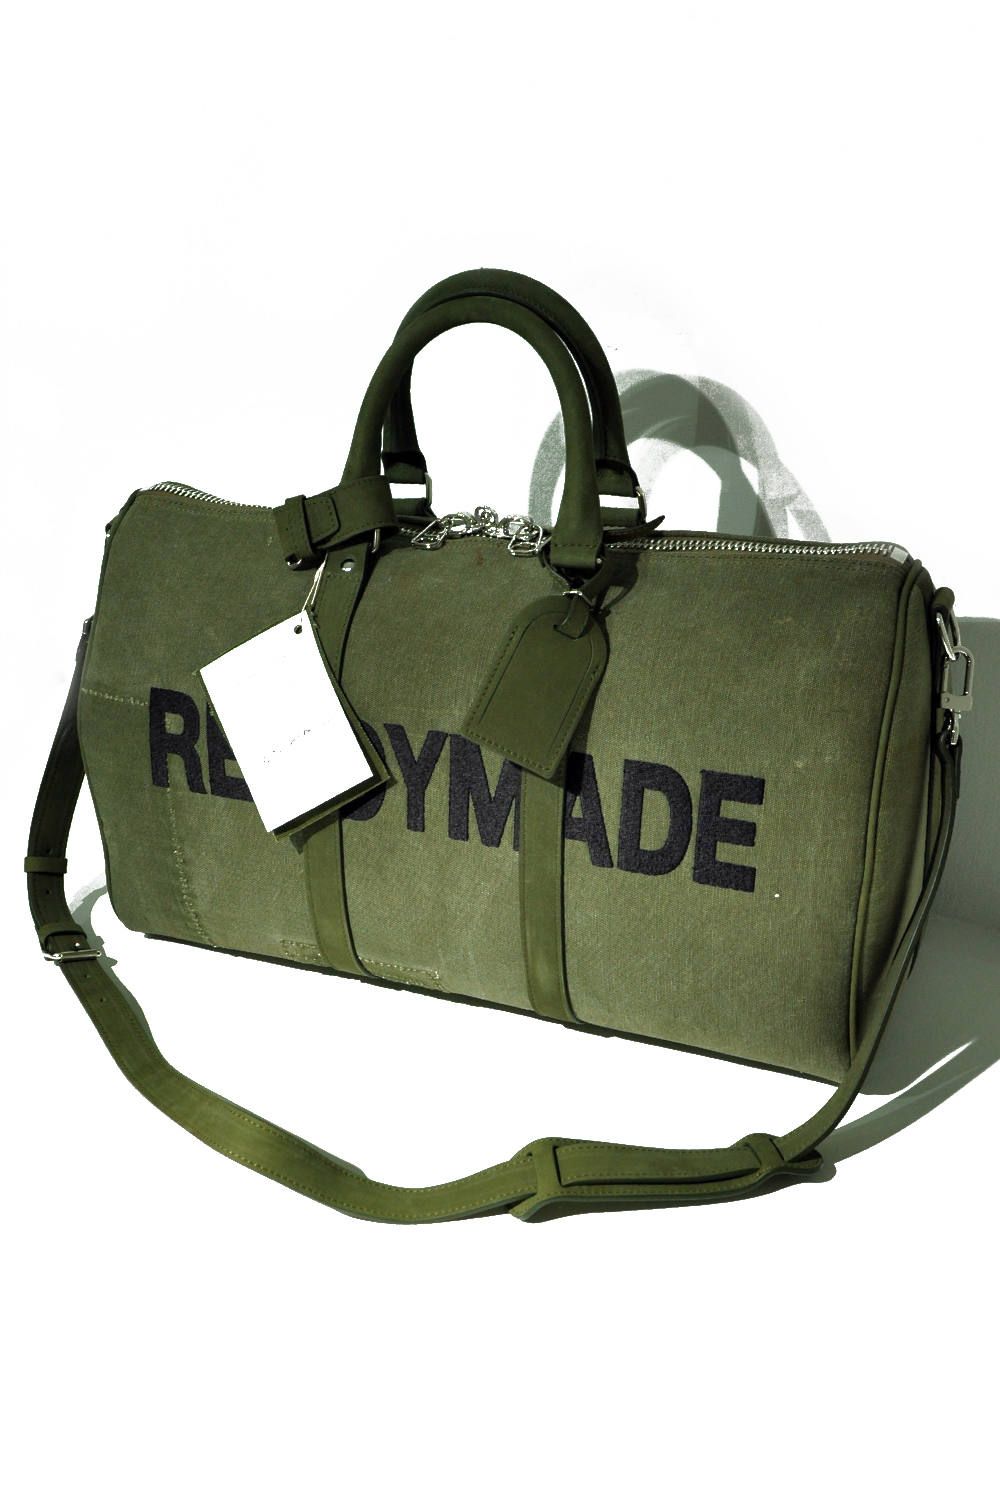 READYMADE - Over Night Bag(M) | laid-back